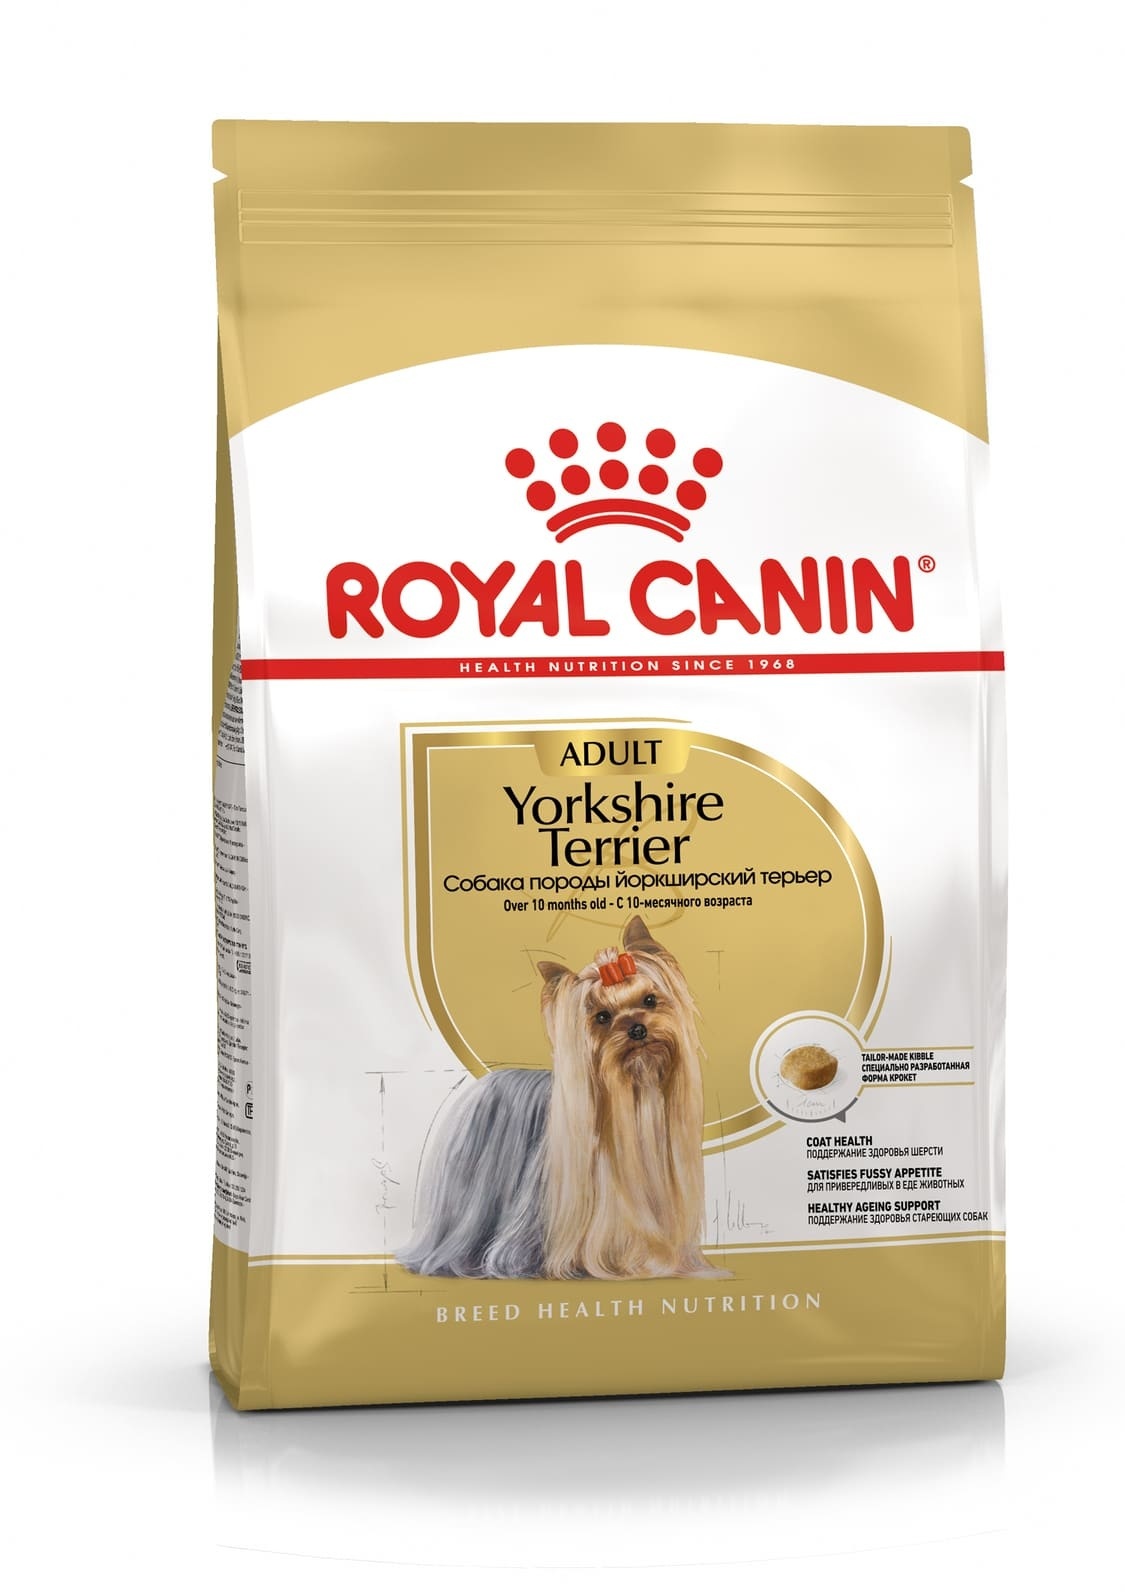 Royal Canin Корм Royal Canin корм для йоркширского терьера с 10 месяцев (500 г) корм для собак royal canin yorkshire terrier adult 500 г